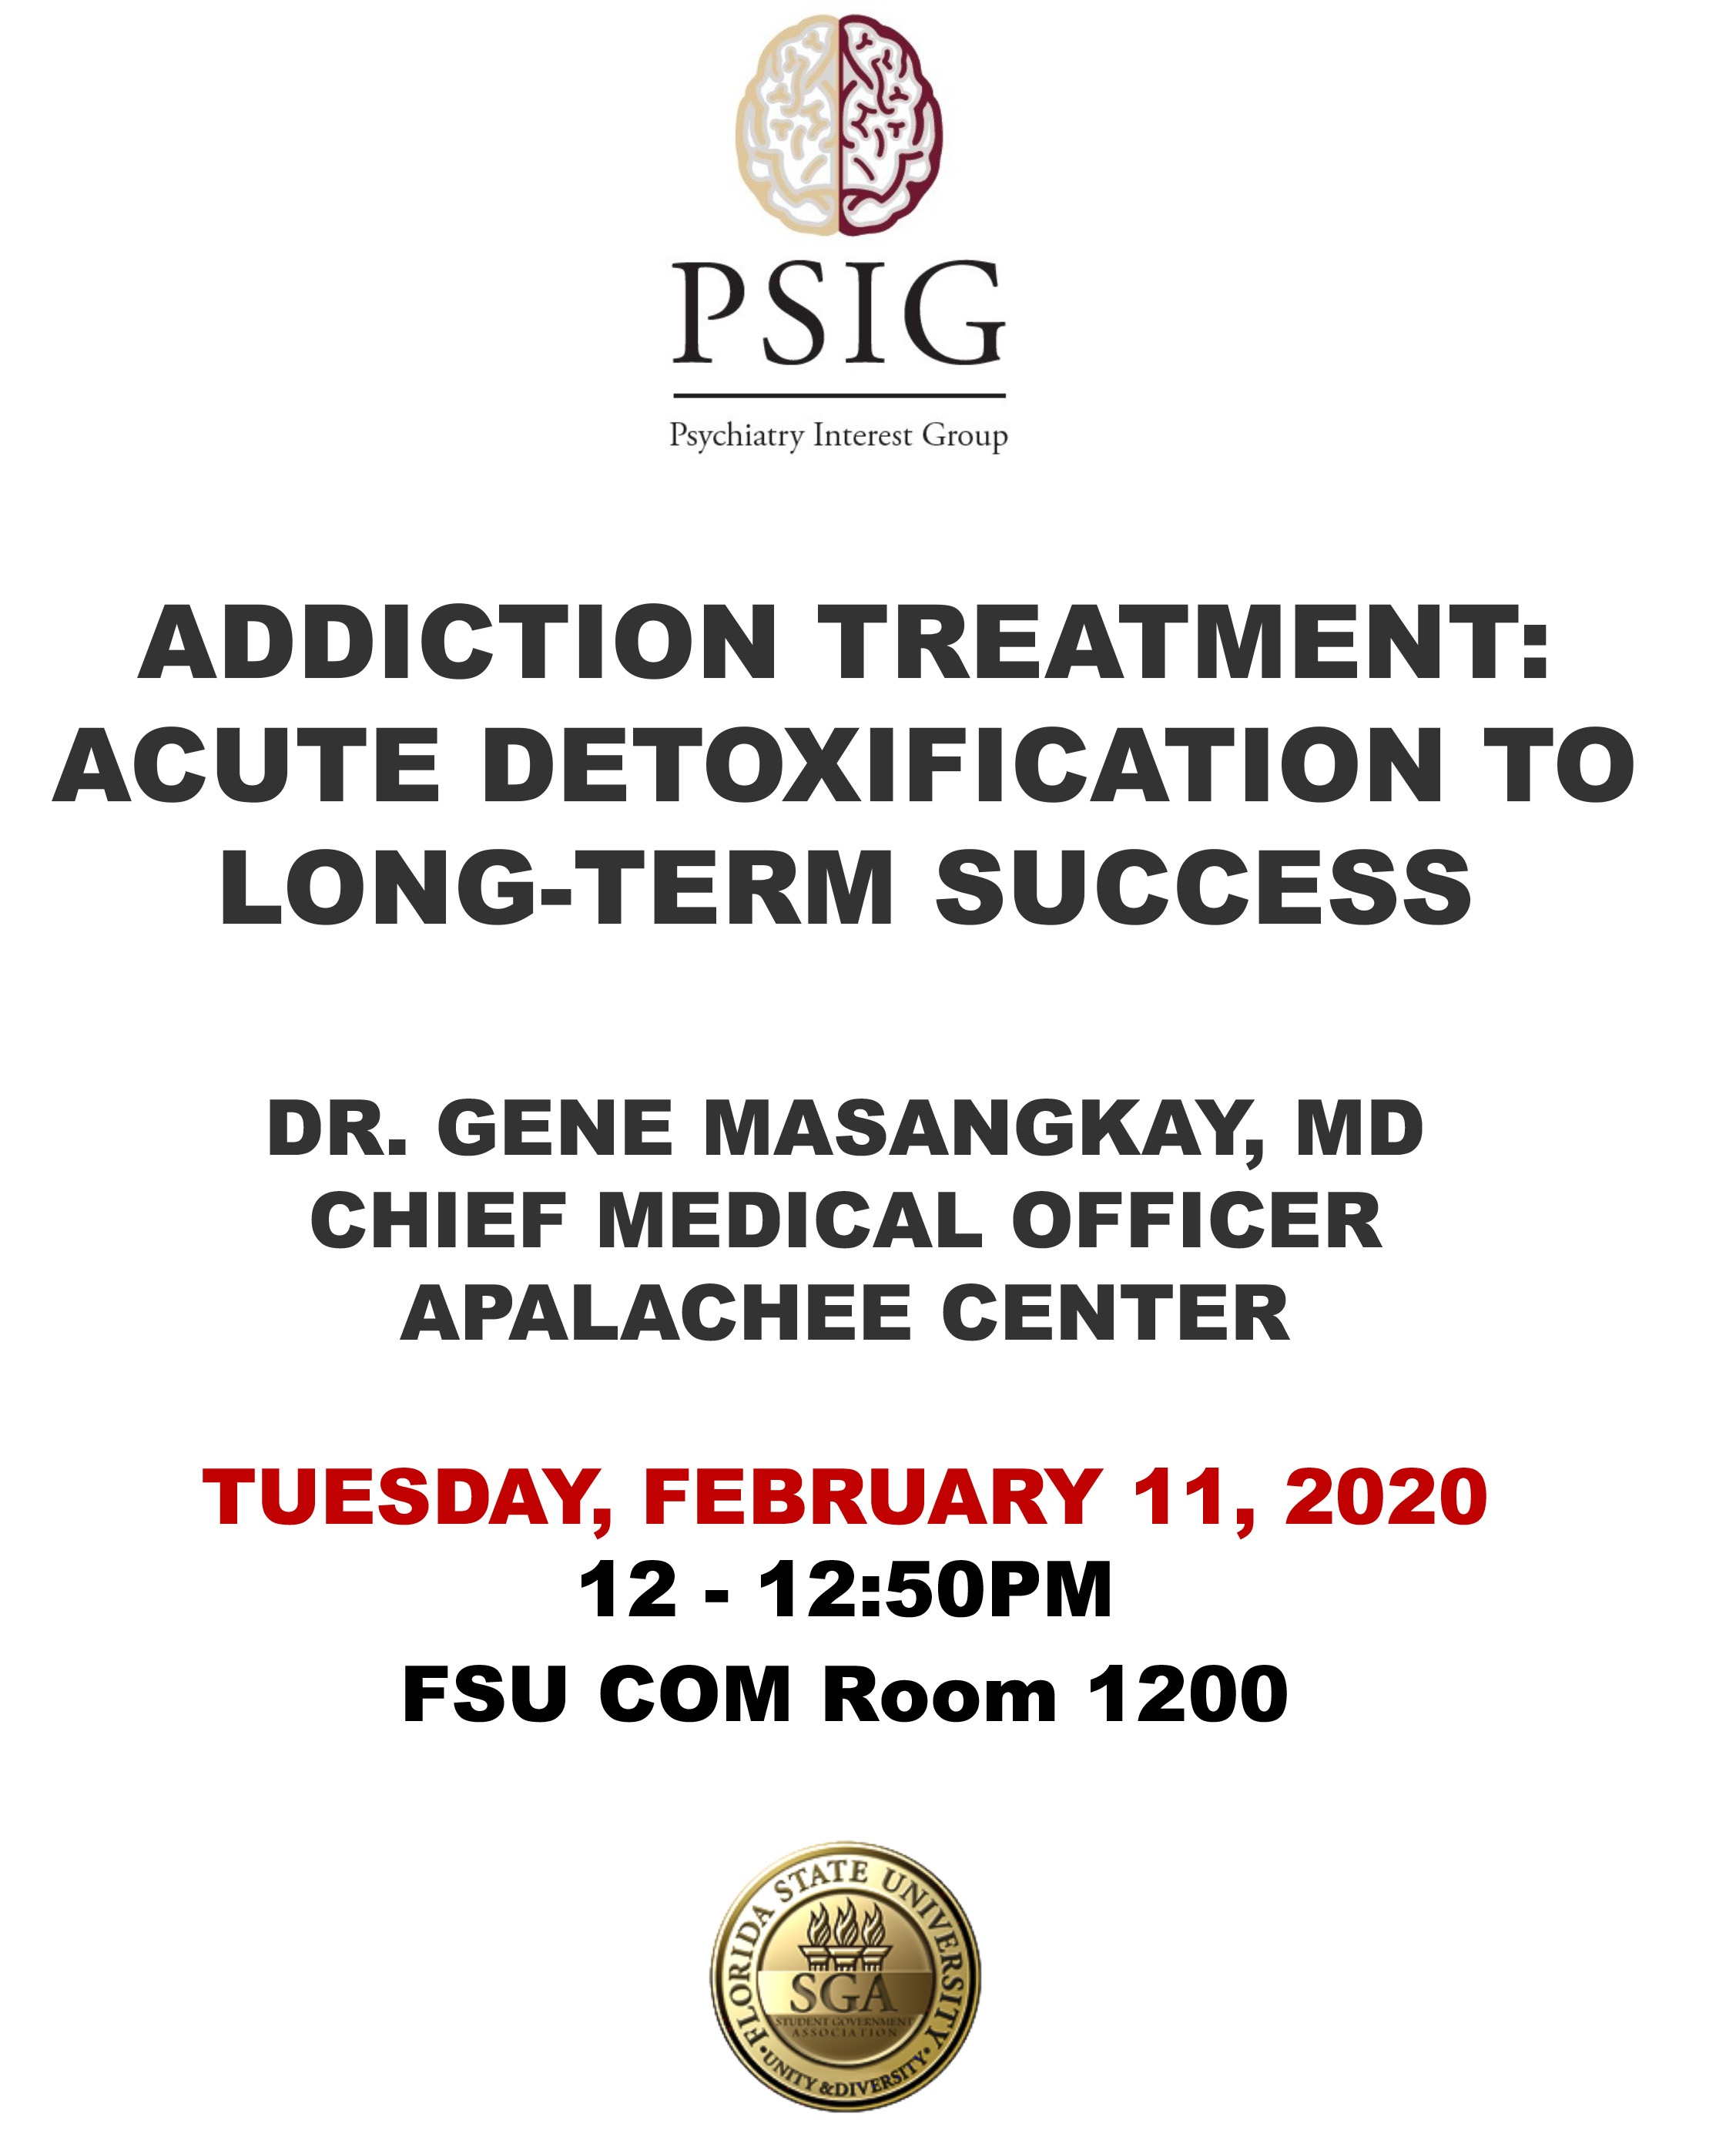 Addiction event flyer - Feb. 11